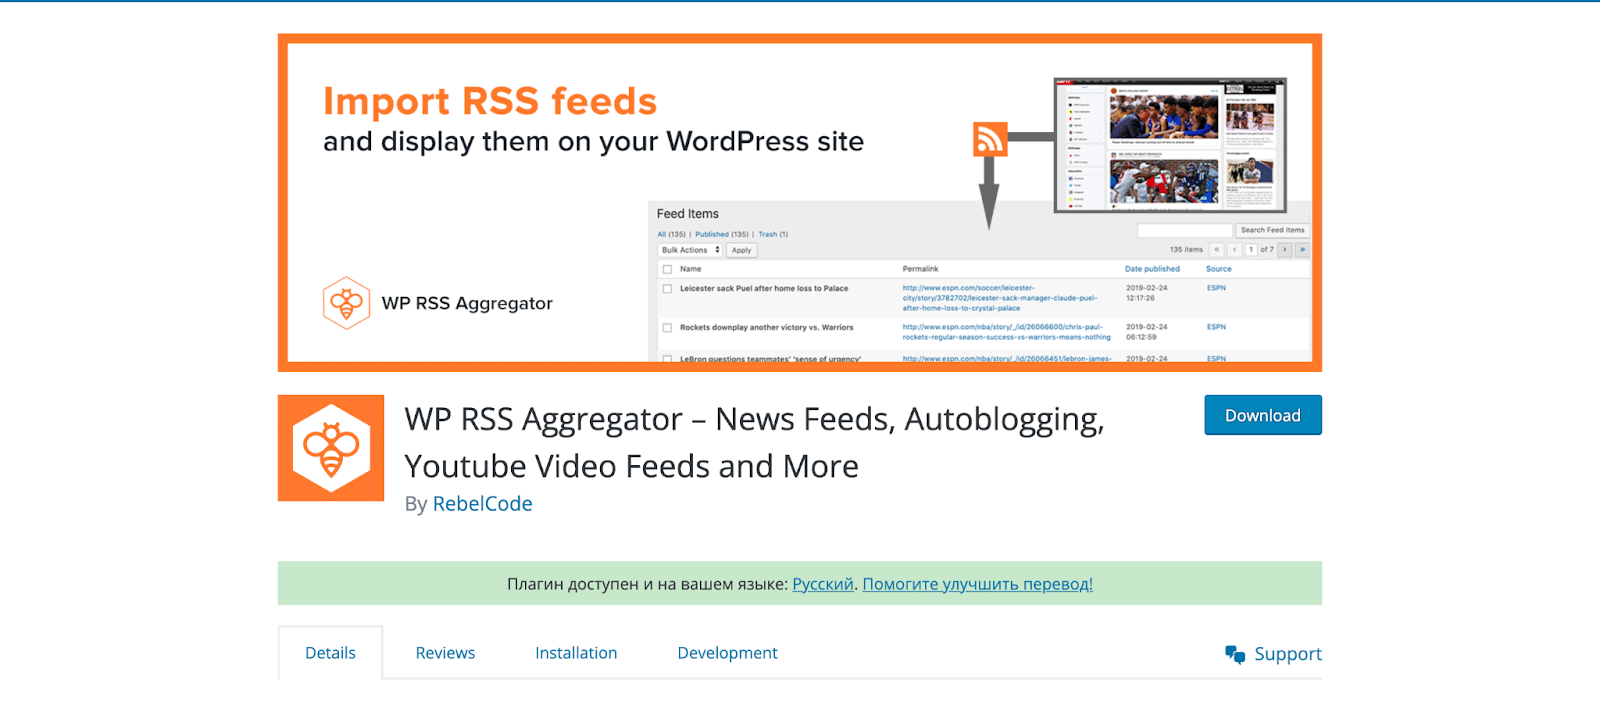 WordPress Content Syndication